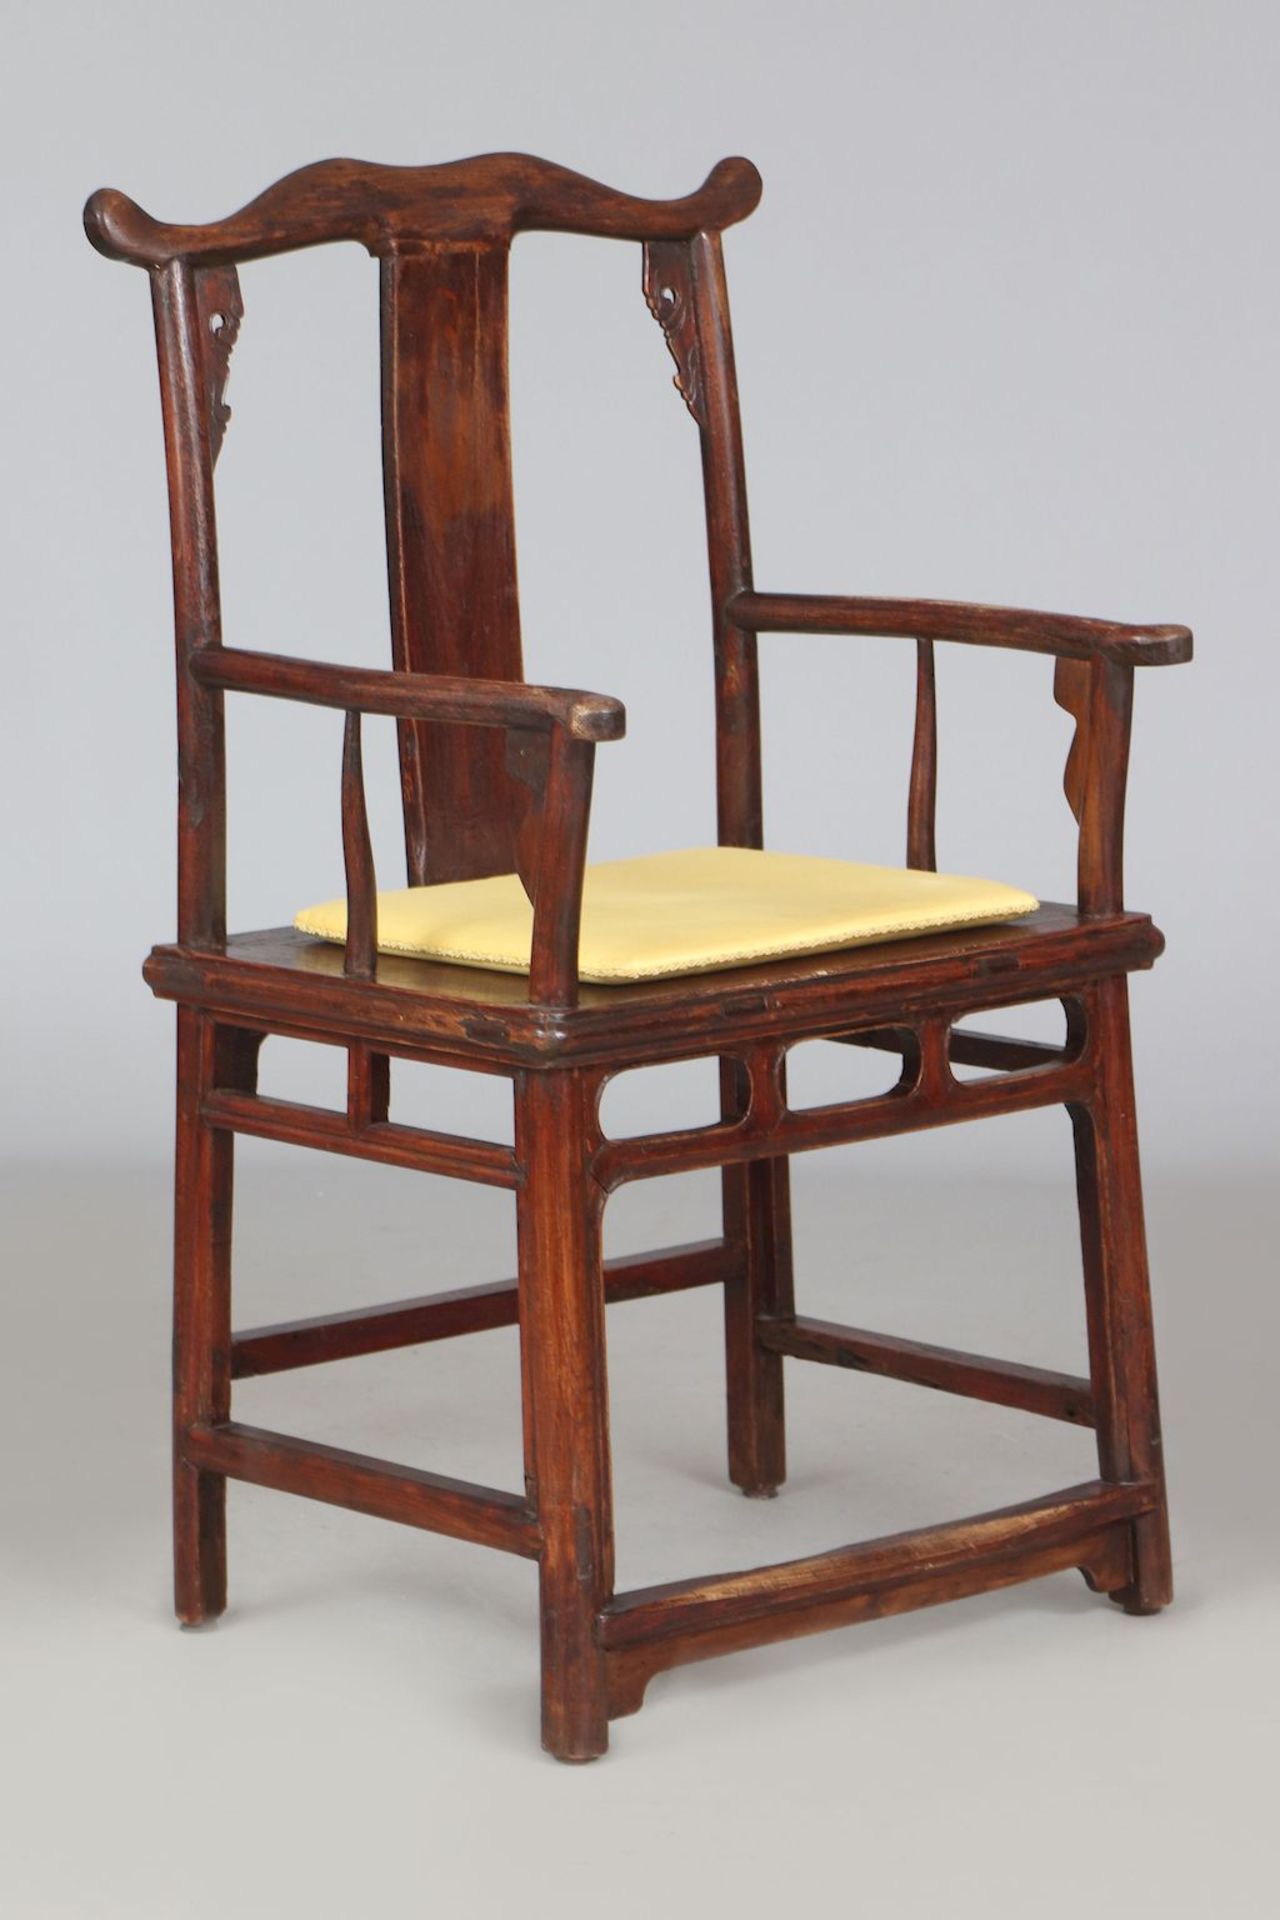 AI WEIWEI (1957 Peking) ¨Fairytale Chair¨